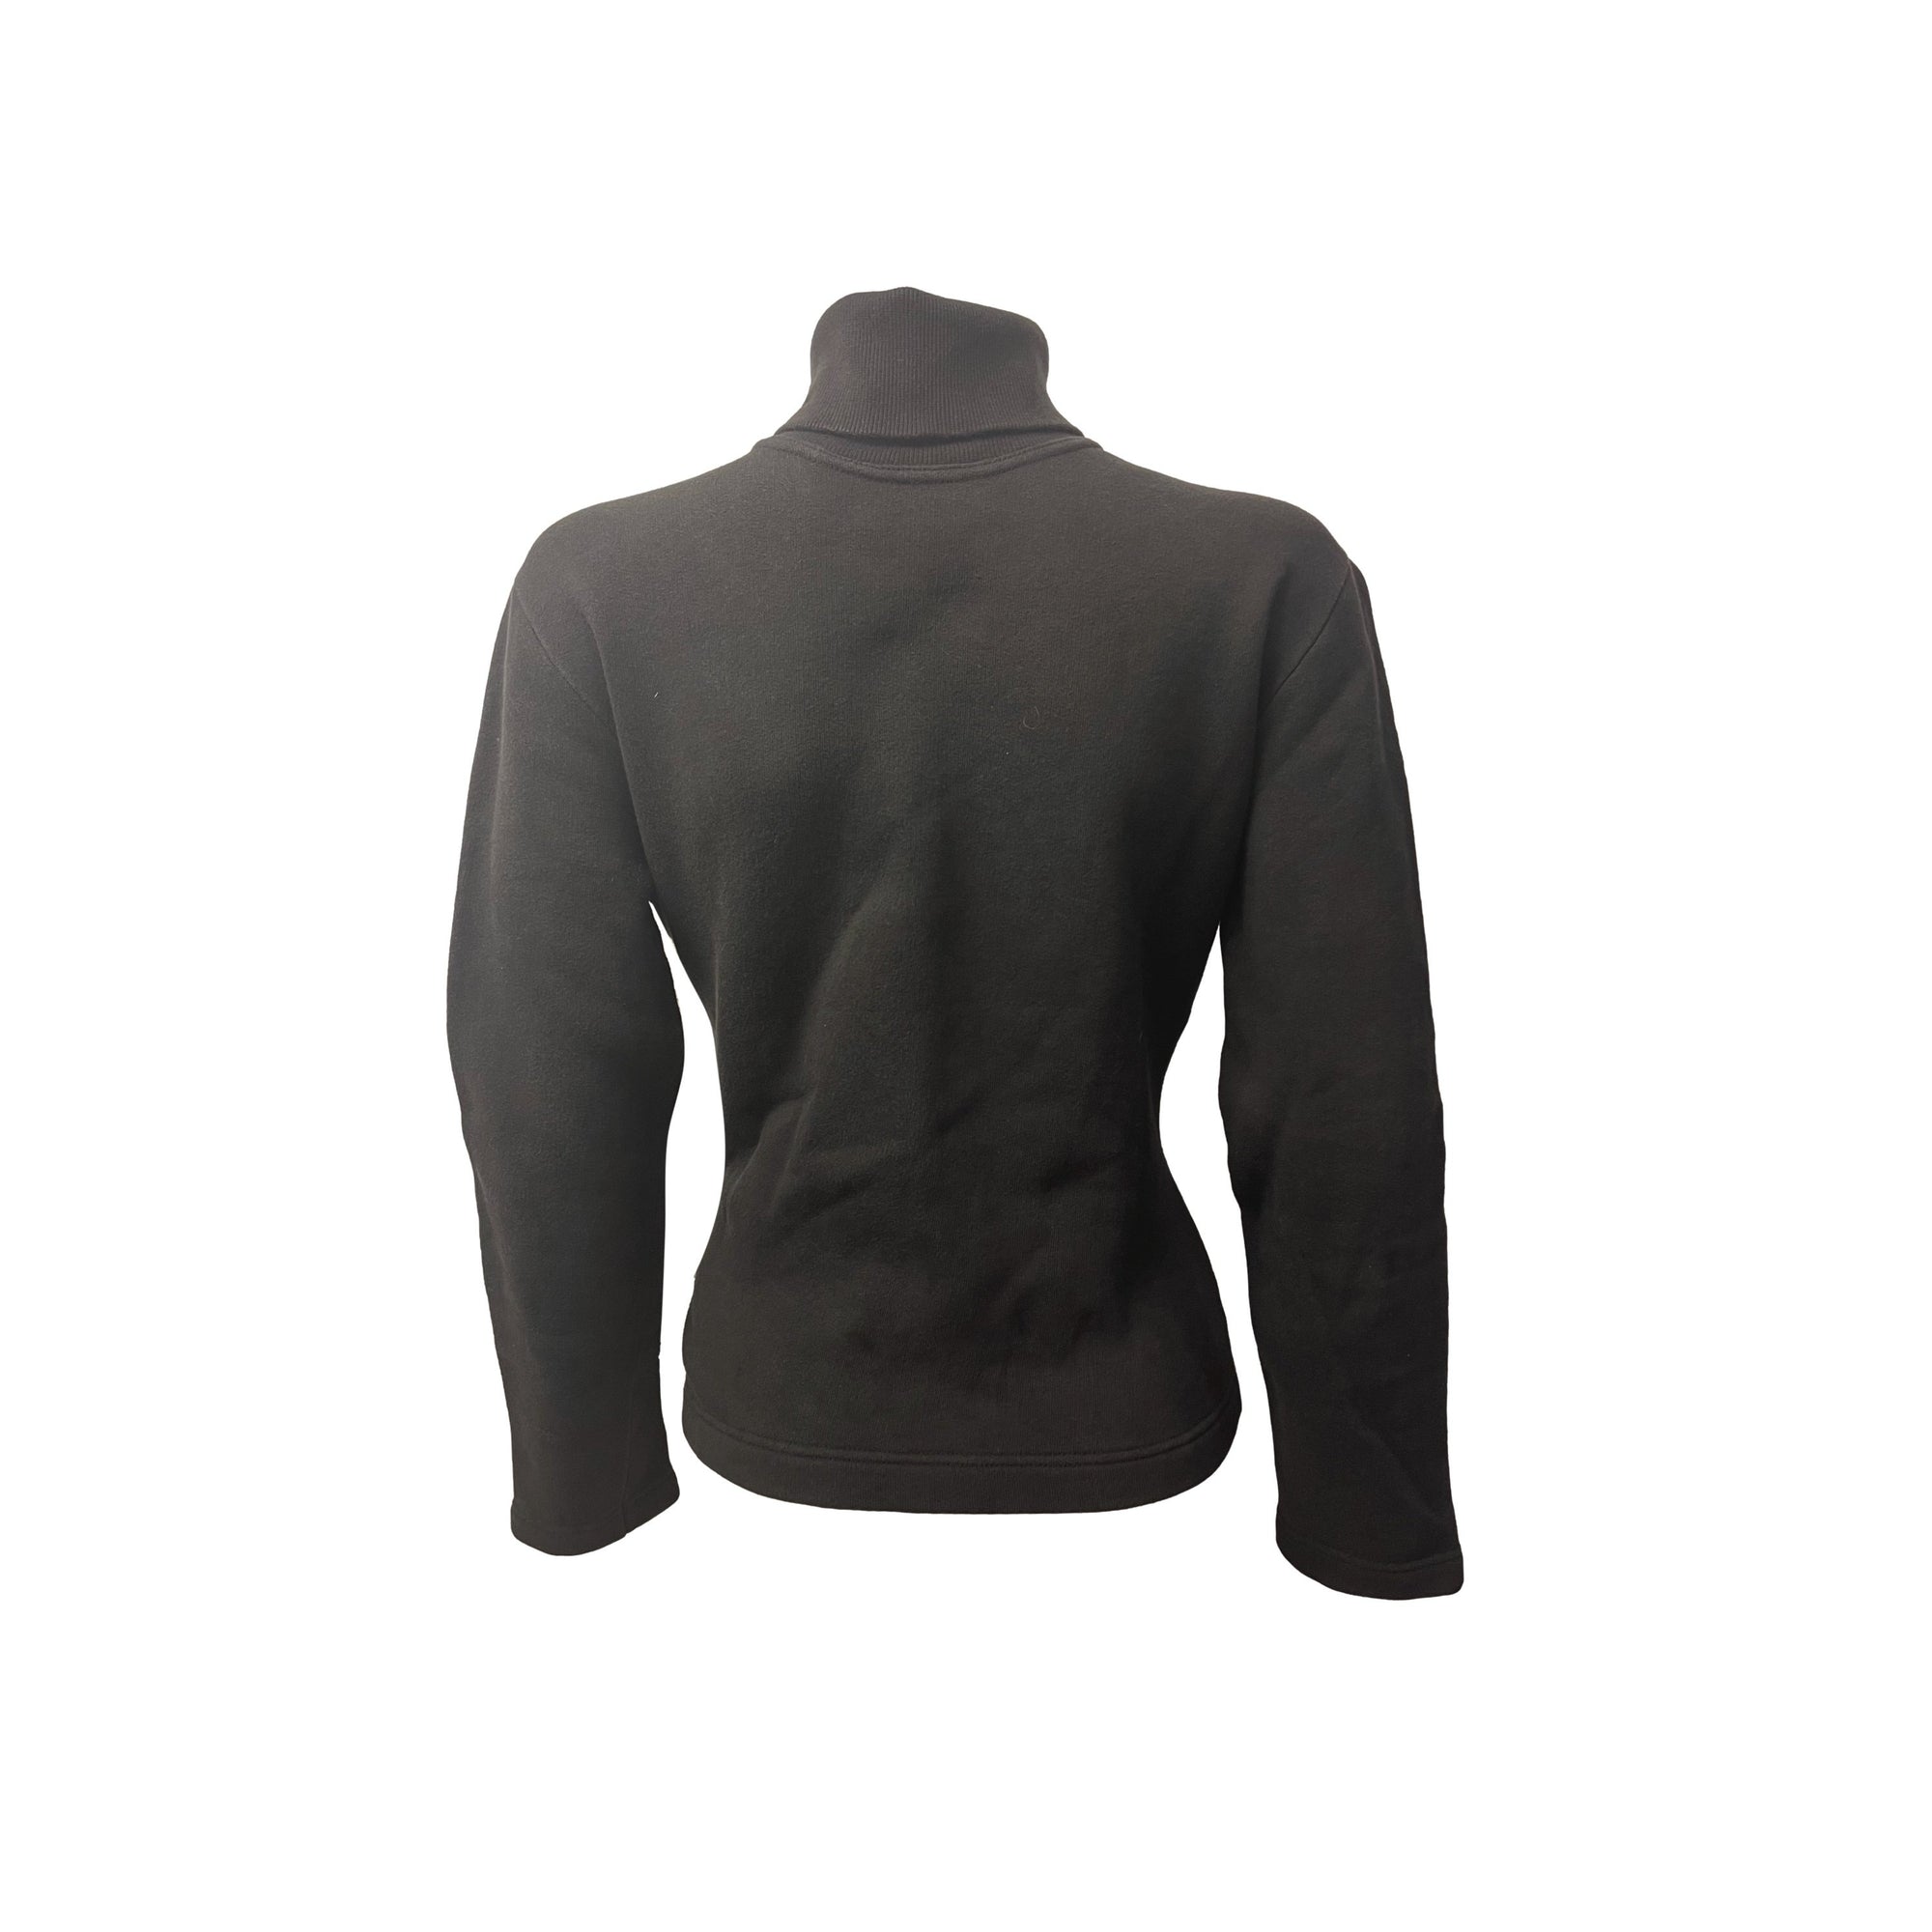 Fendi Black Logo Sweatshirt Set - Apparel